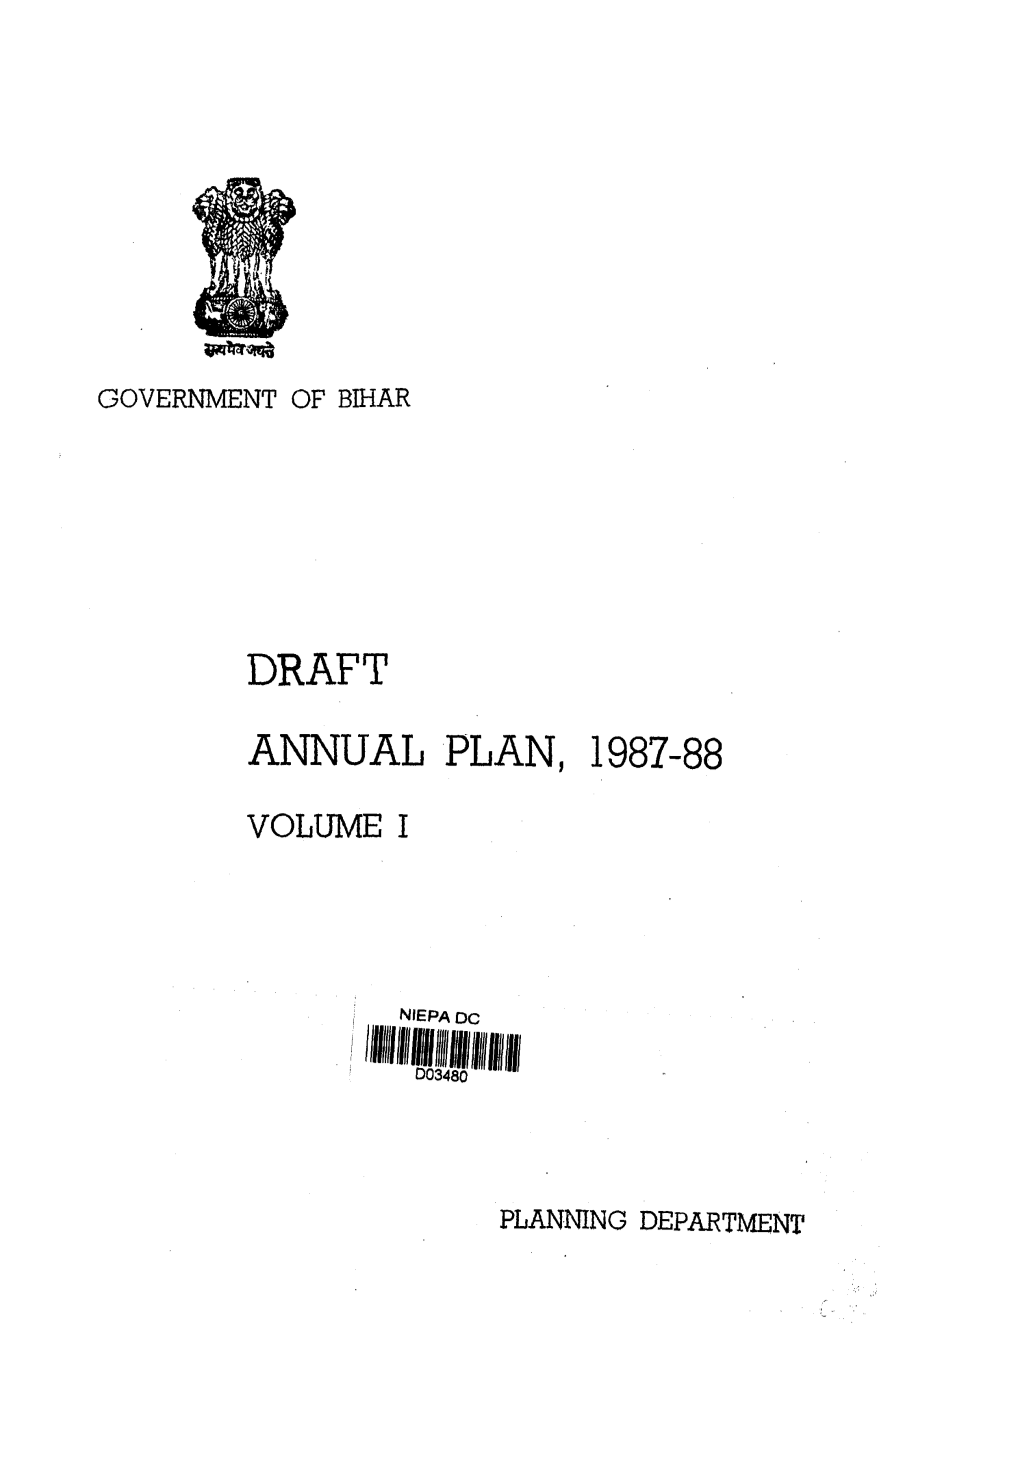 Draft Annual Plan, 1987-88